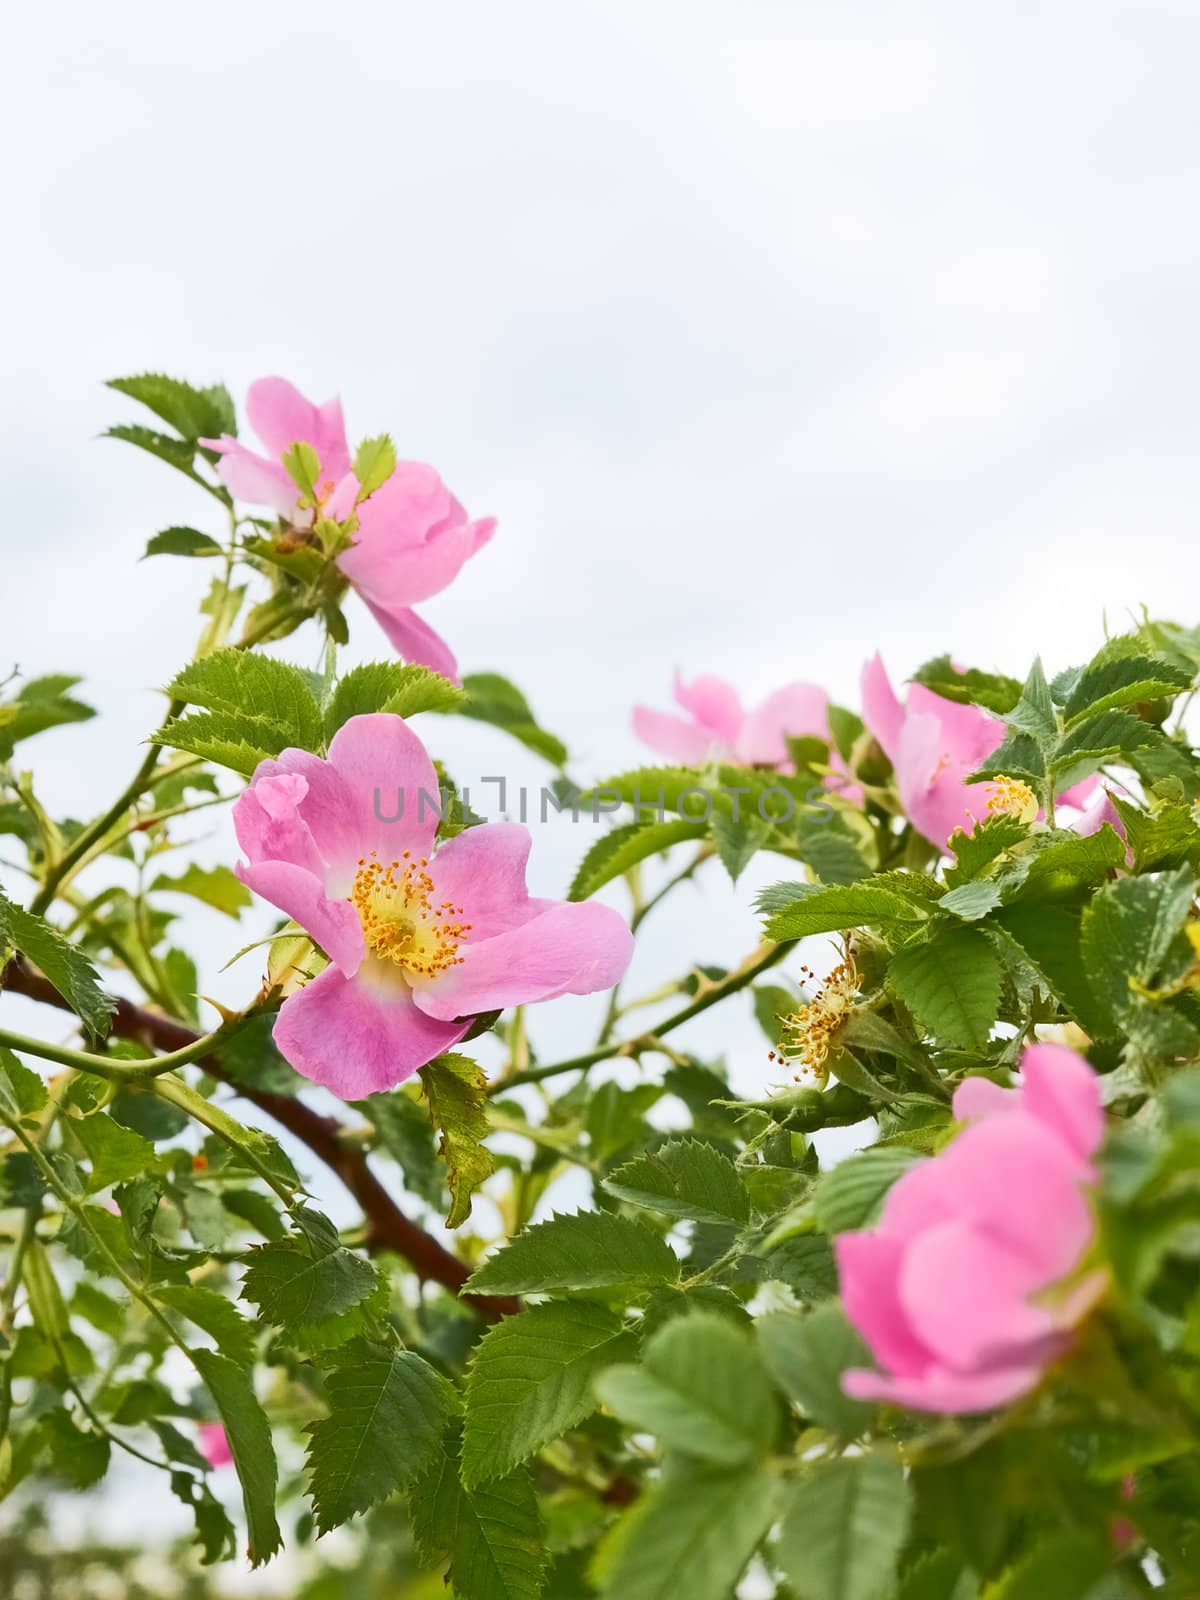 Pink flowers of wild roses in flowering season against the sky close-up